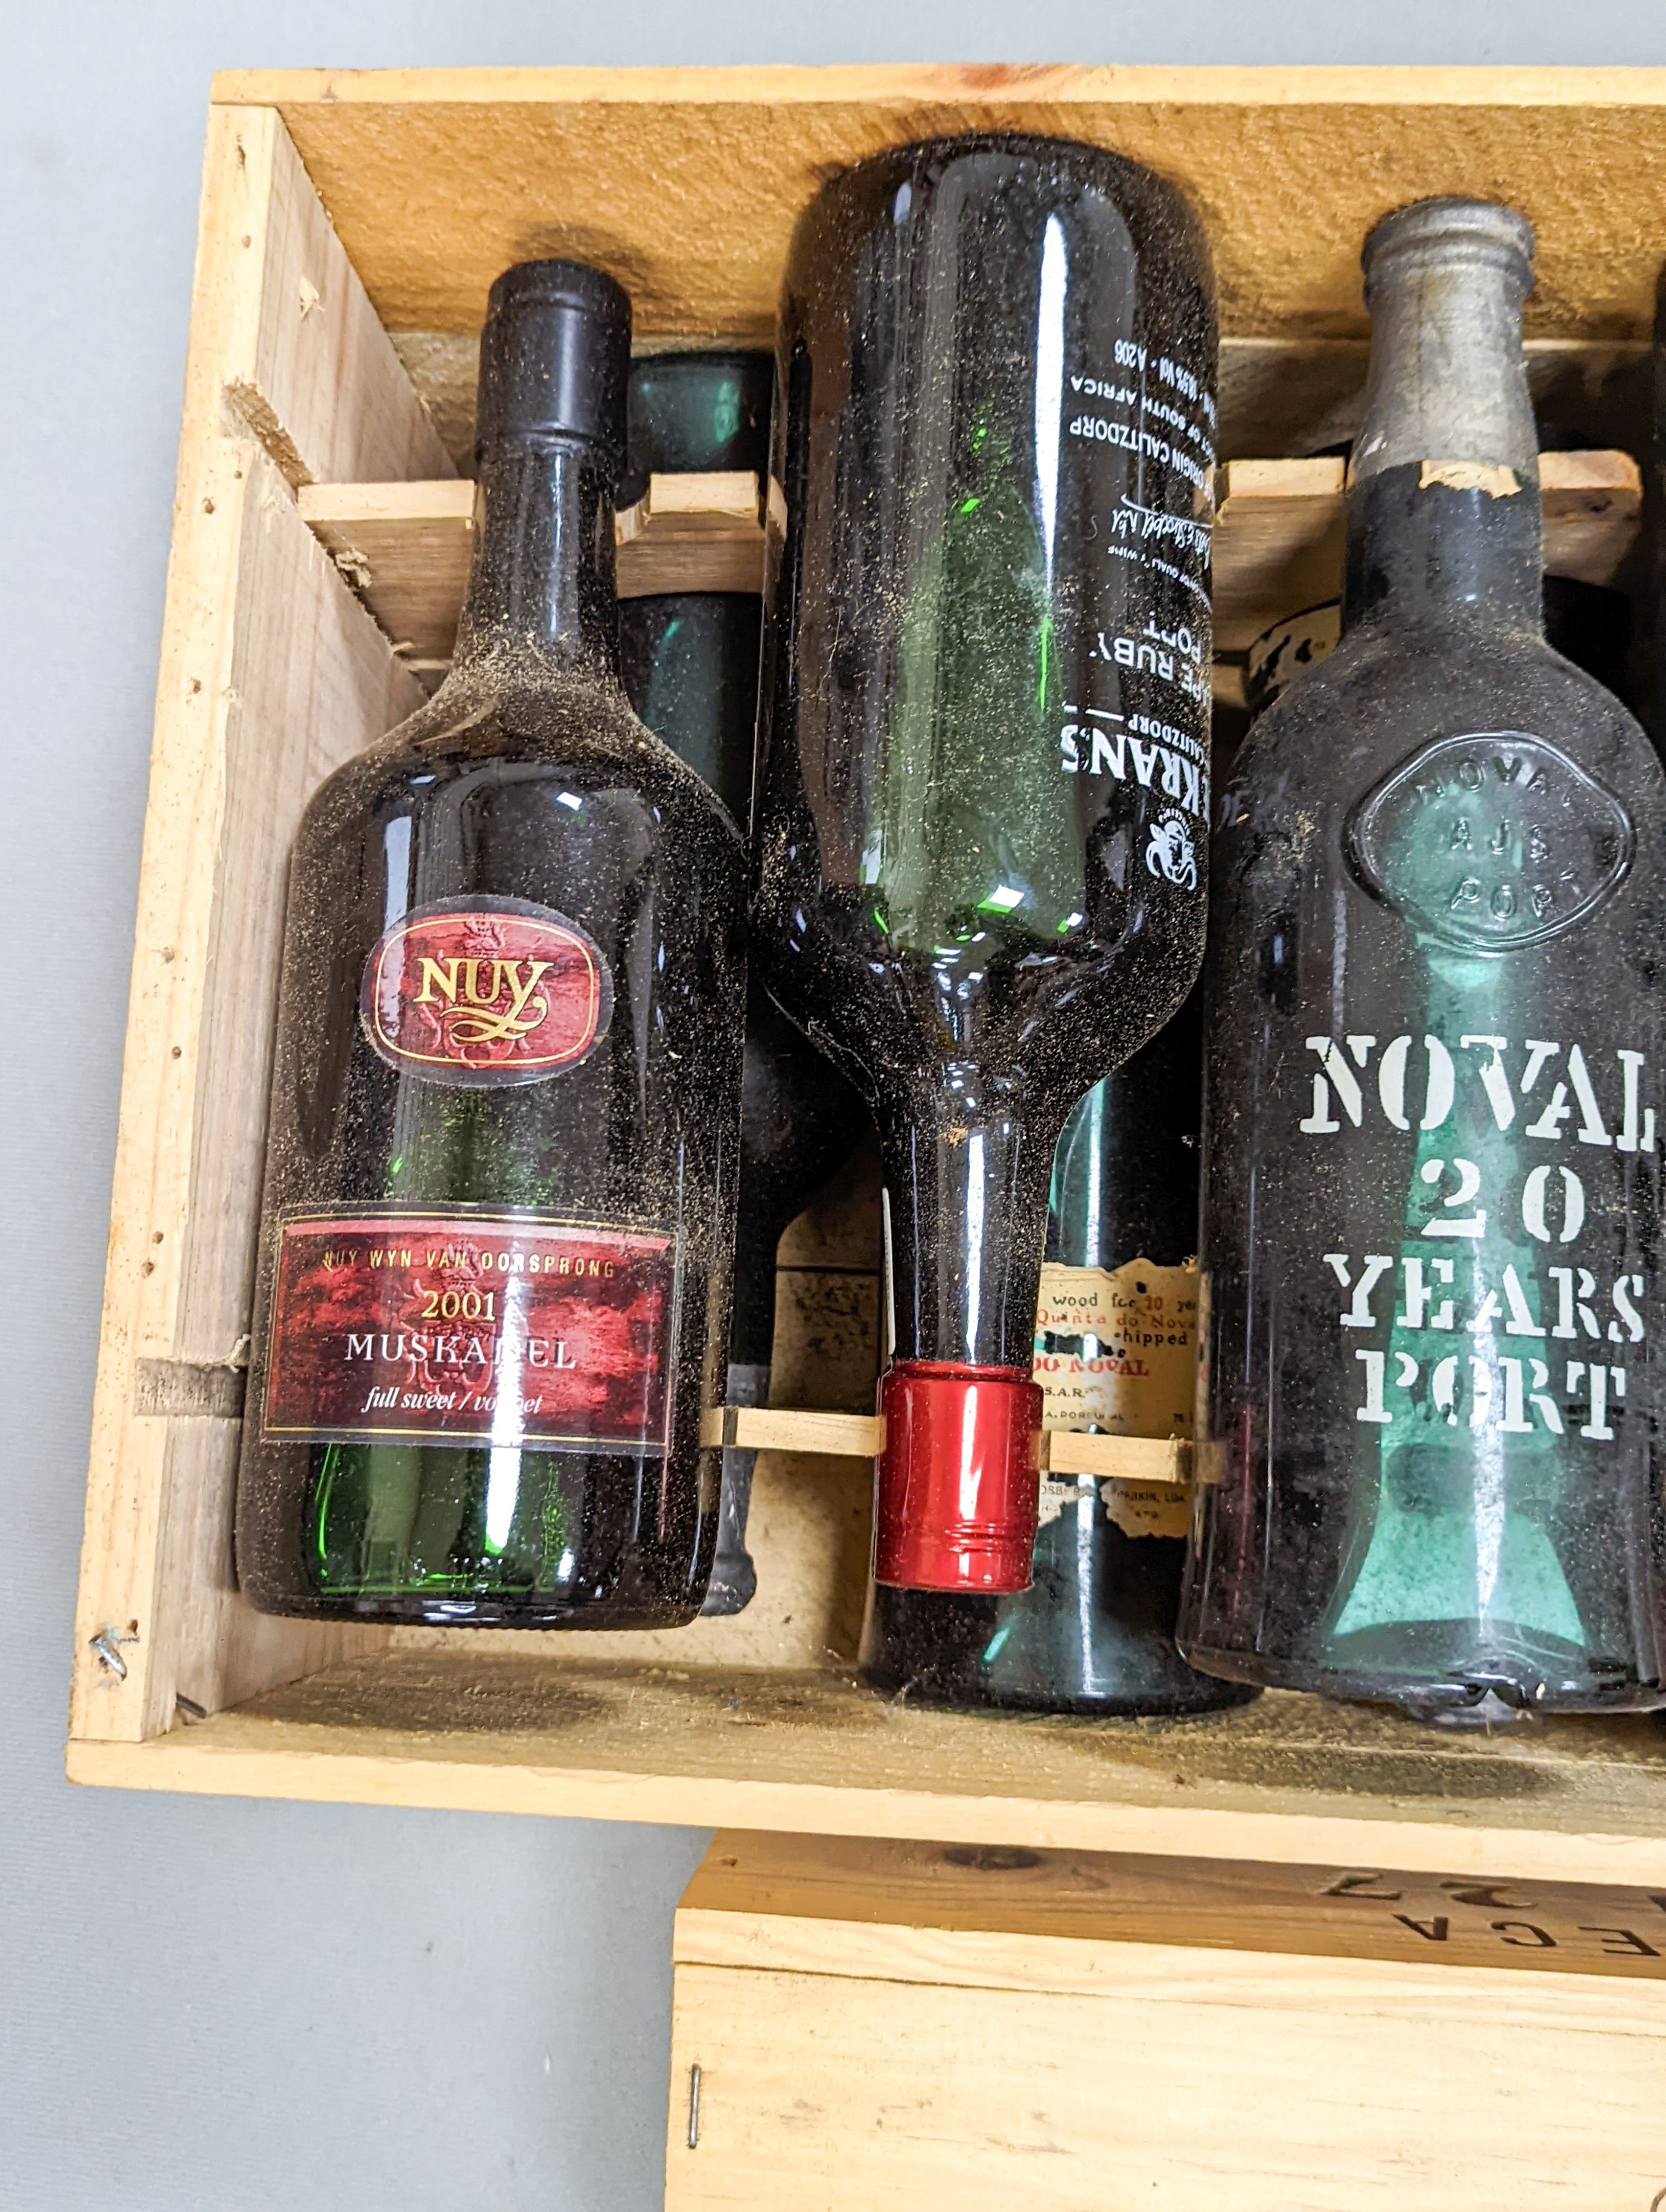 13 various bottles of port including Taylor’s 1975 vintage, Dow’s 1964, Noval etc.